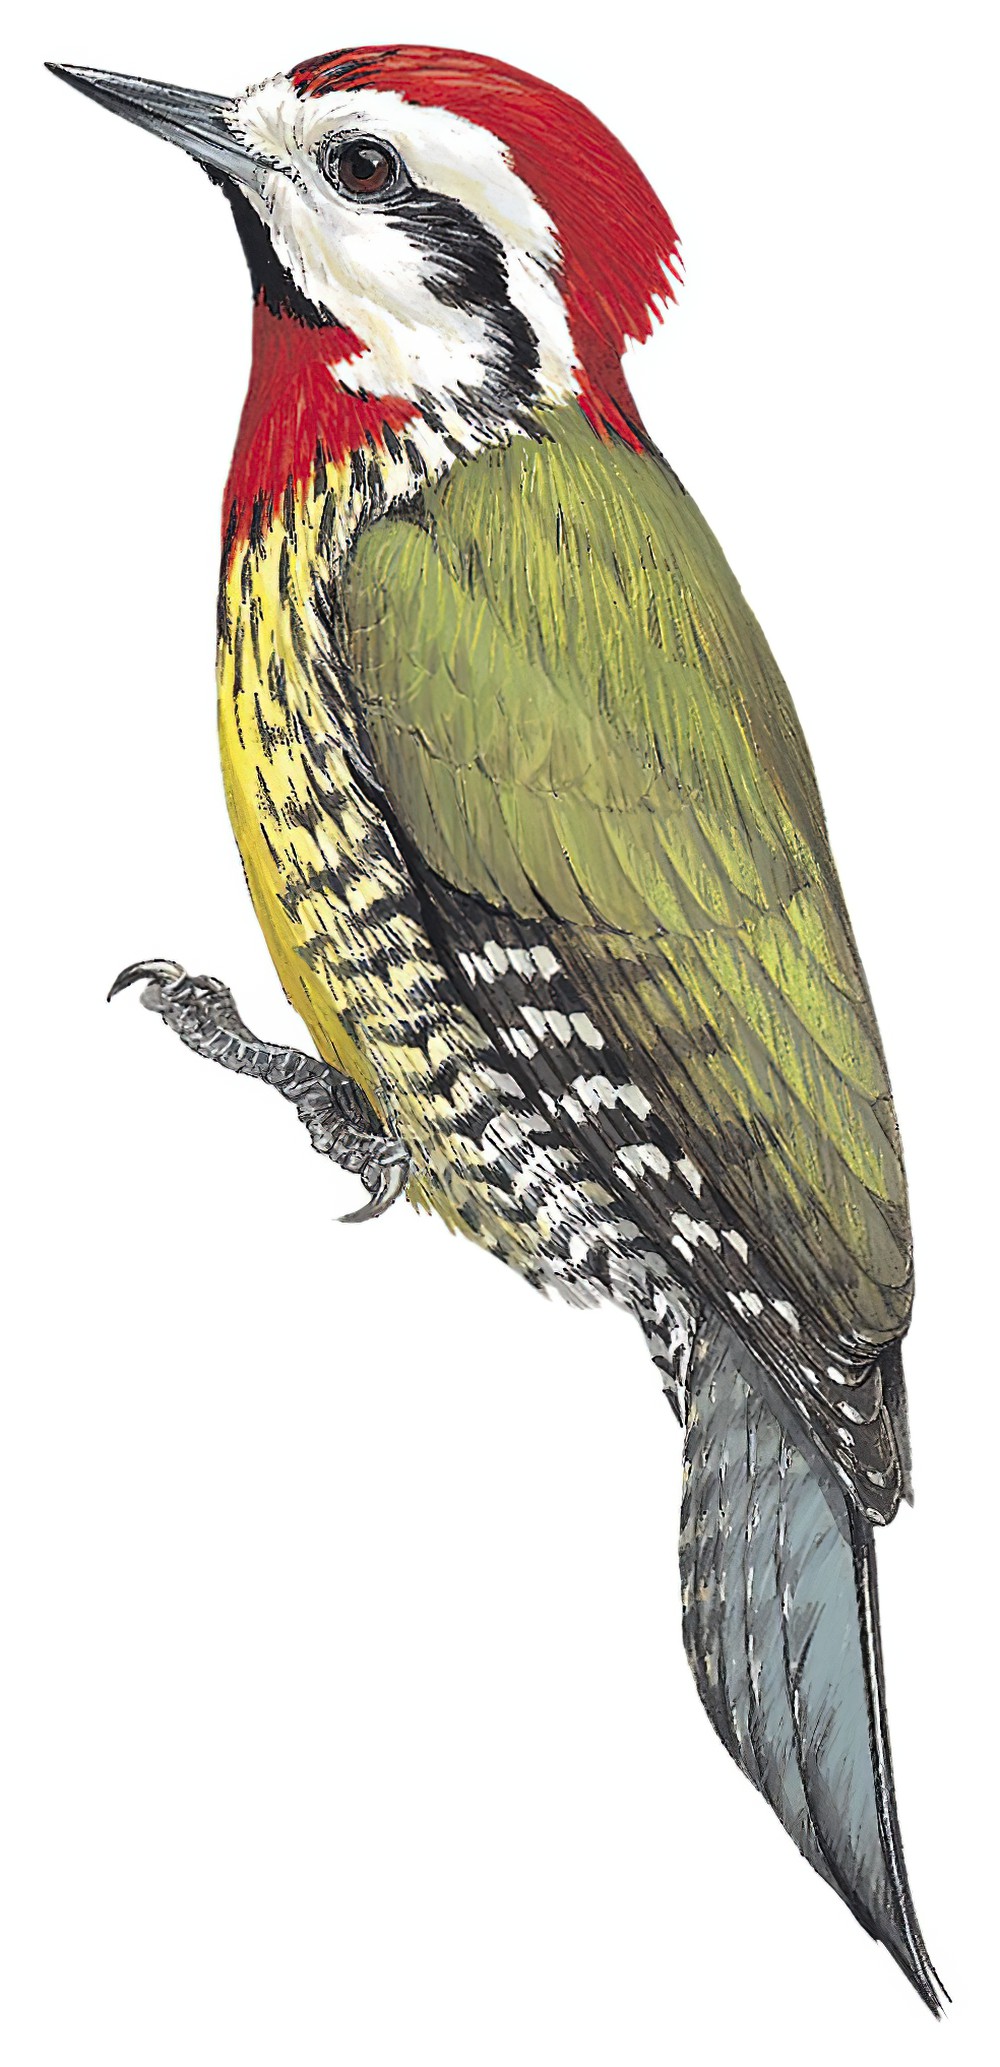 Cuban Green Woodpecker / Xiphidiopicus percussus